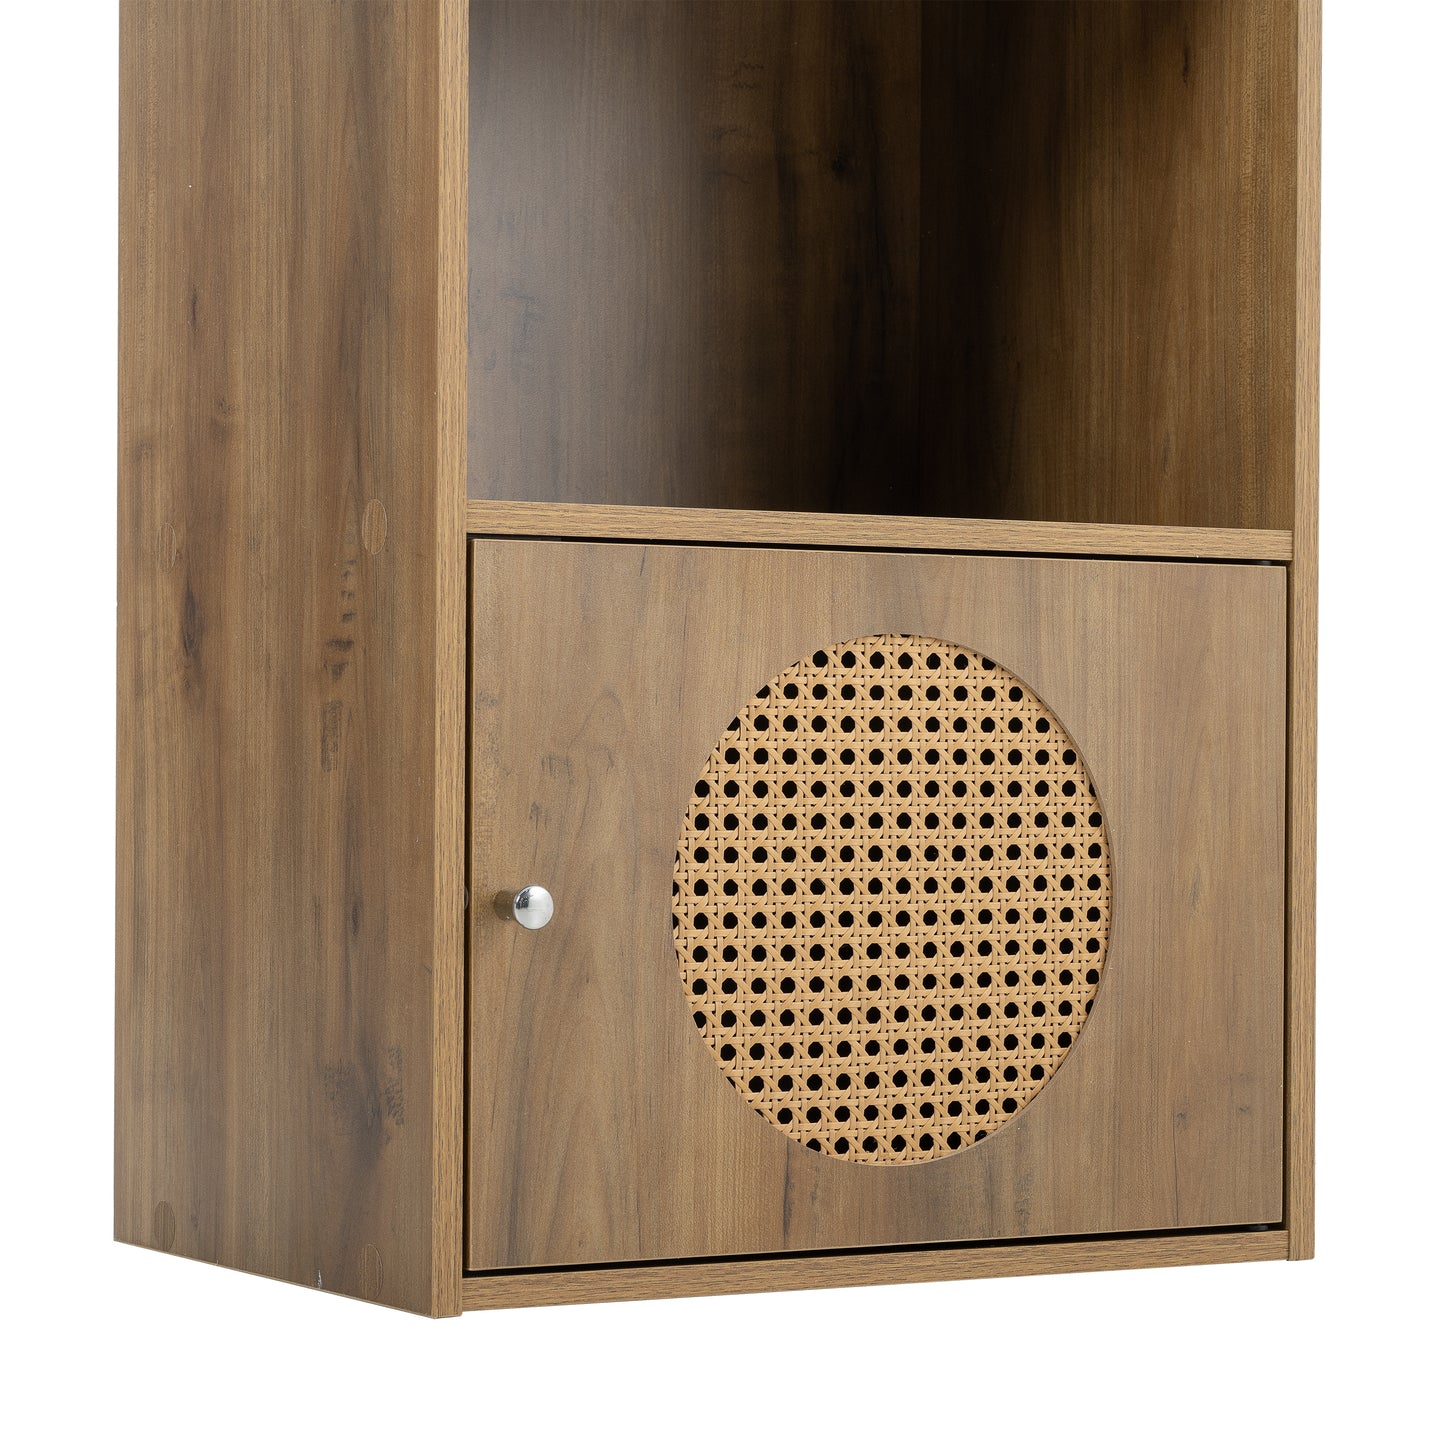 Bathroom Storage Cabinet for Bedroom - Rustic Brown